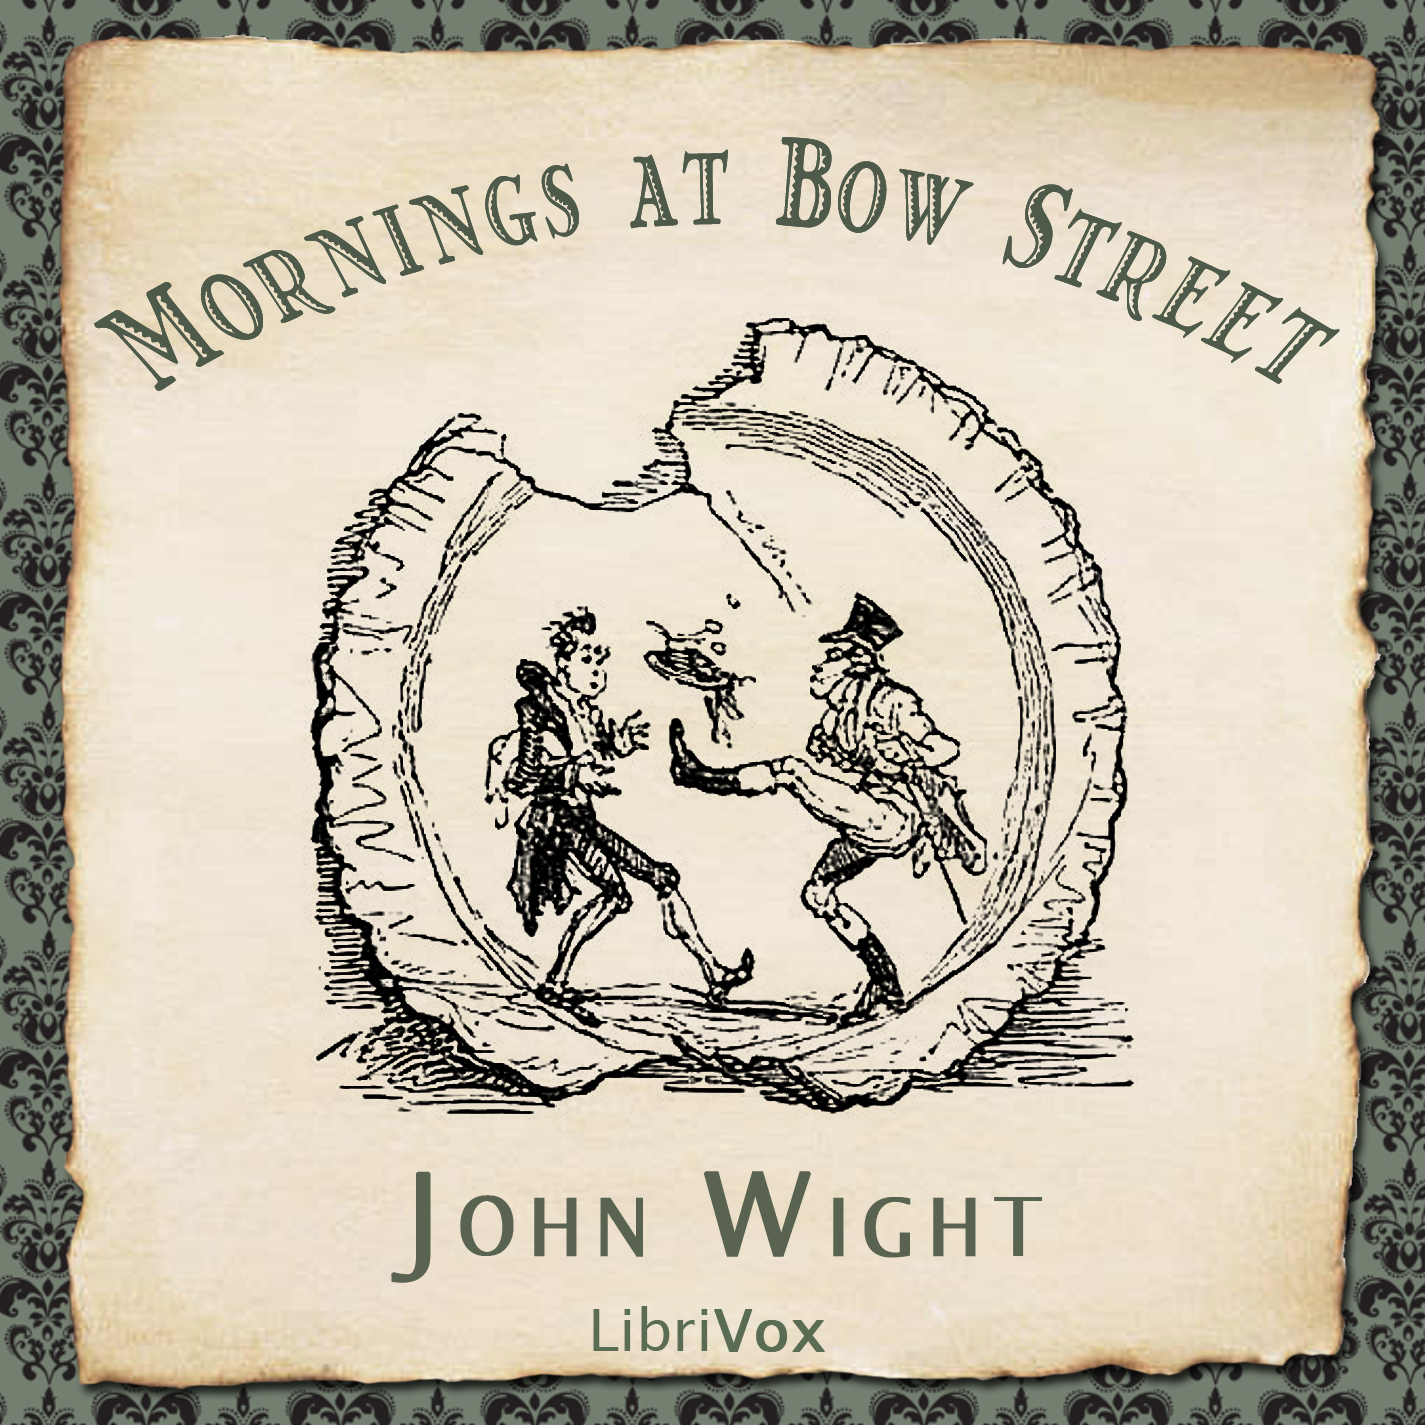 Mornings at Bow Street - John Wight Audiobooks - Free Audio Books | Knigi-Audio.com/en/